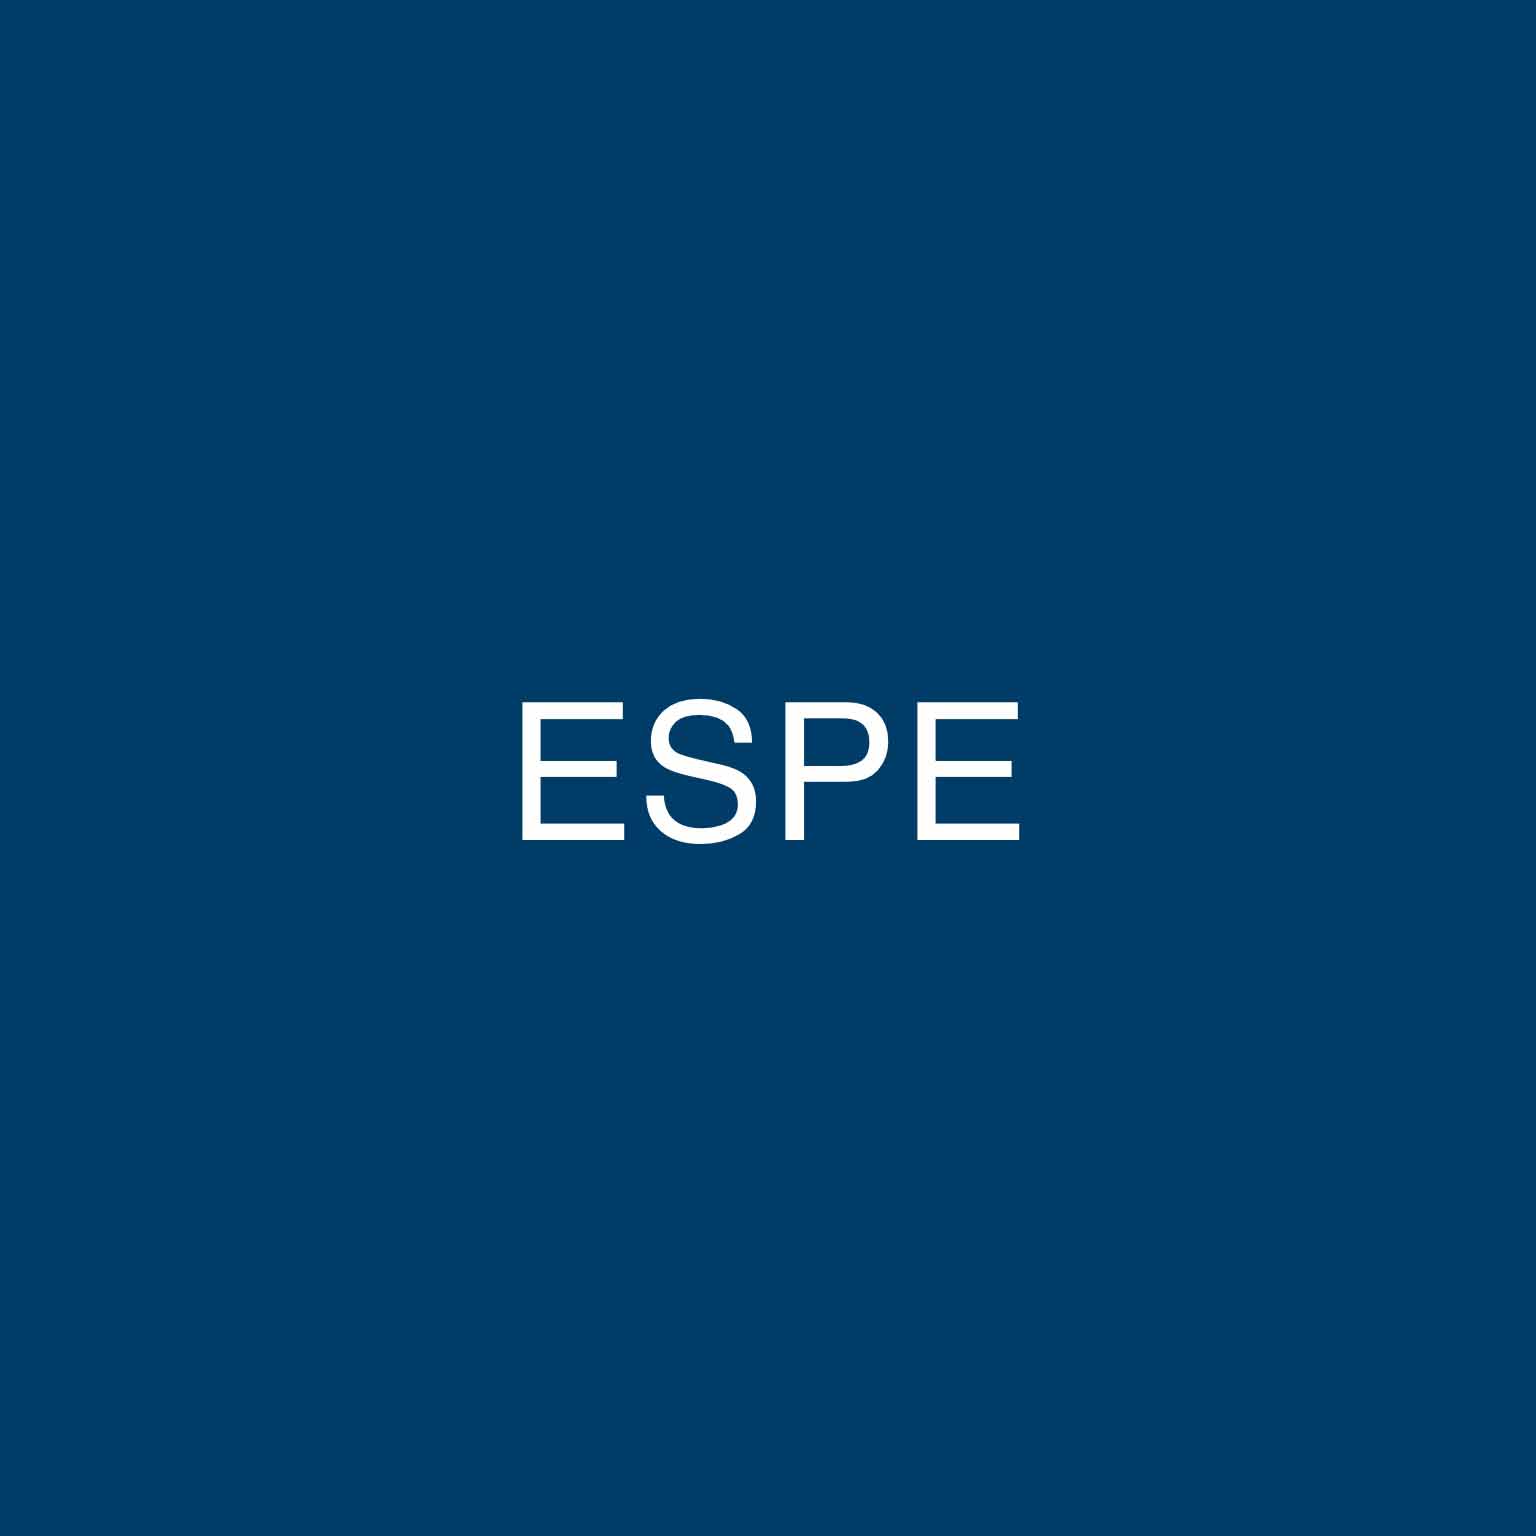 Logo ESPE